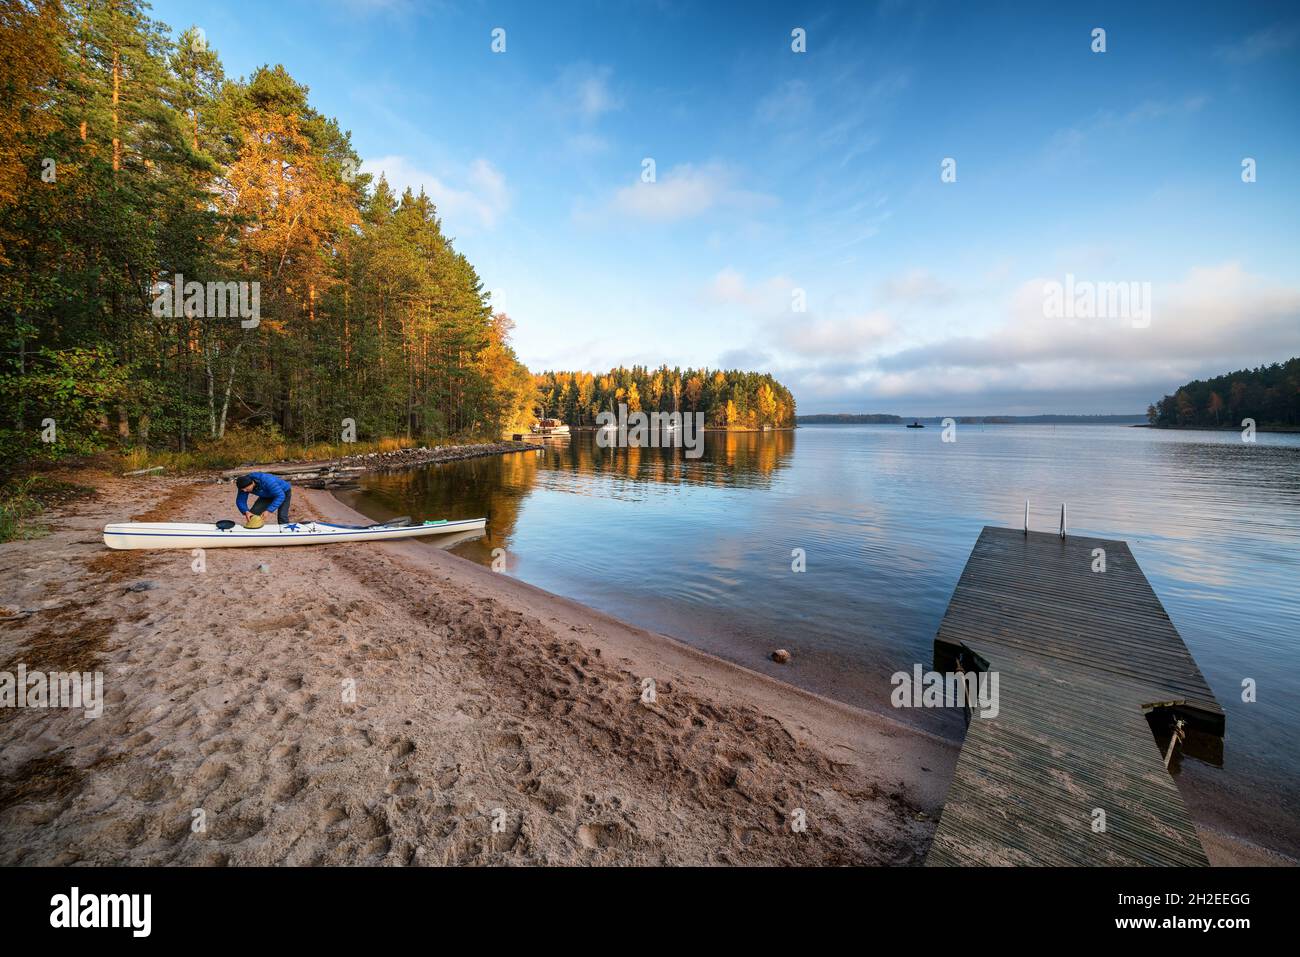 Imballare il kayak e prepararsi a partire all'isola Satamosaari, Lappeenranta, Finlandia Foto Stock